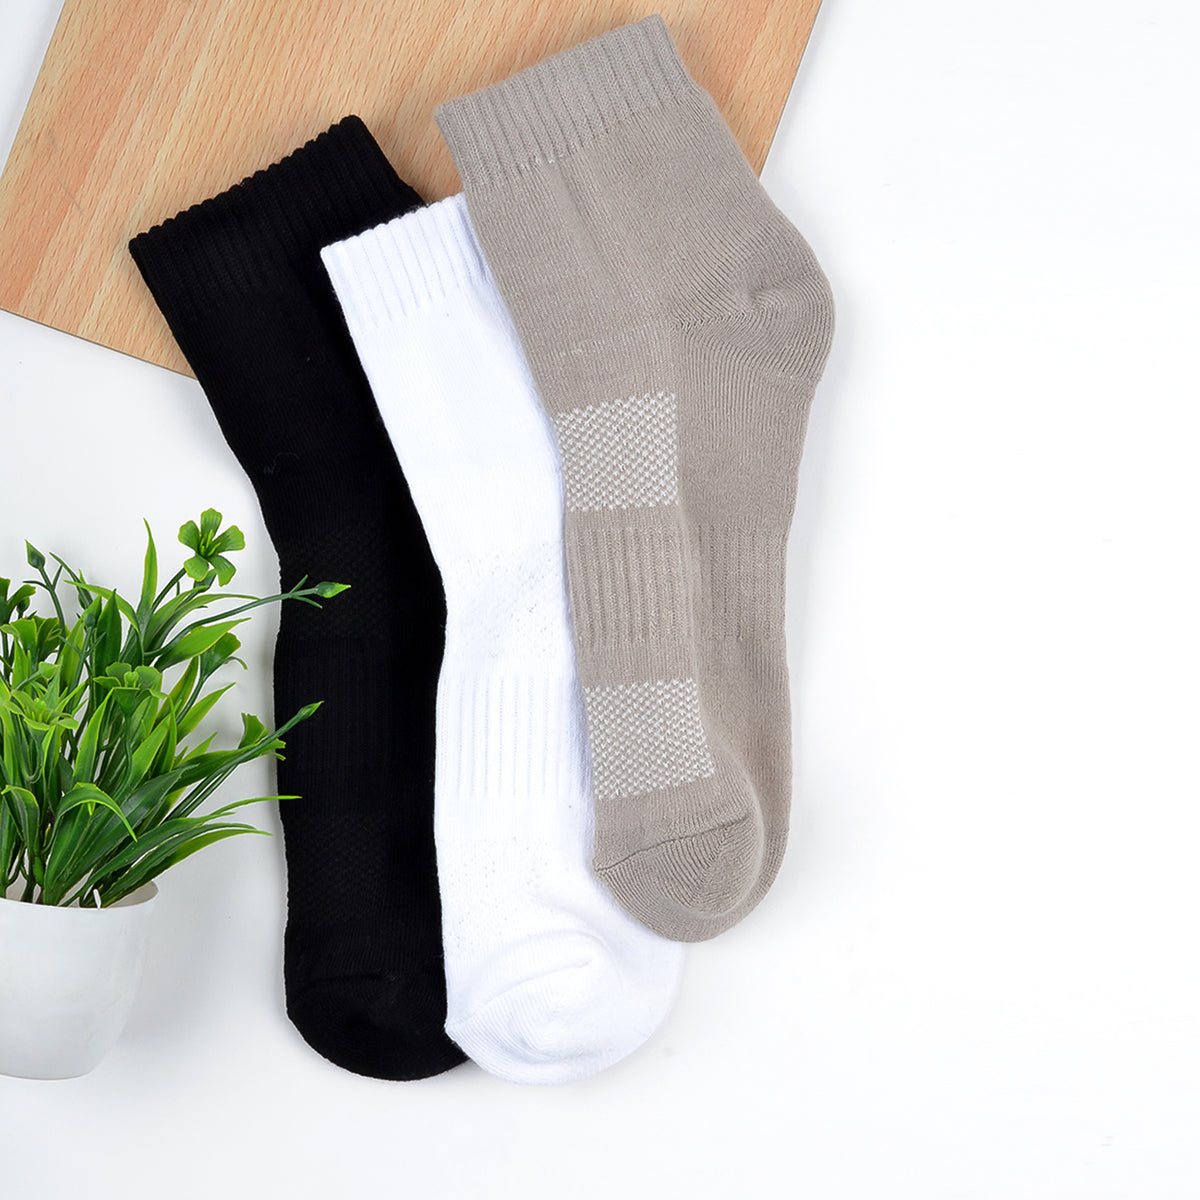 FOOTPRINTS Solid Ankle-Length Socks -Pack Of 3